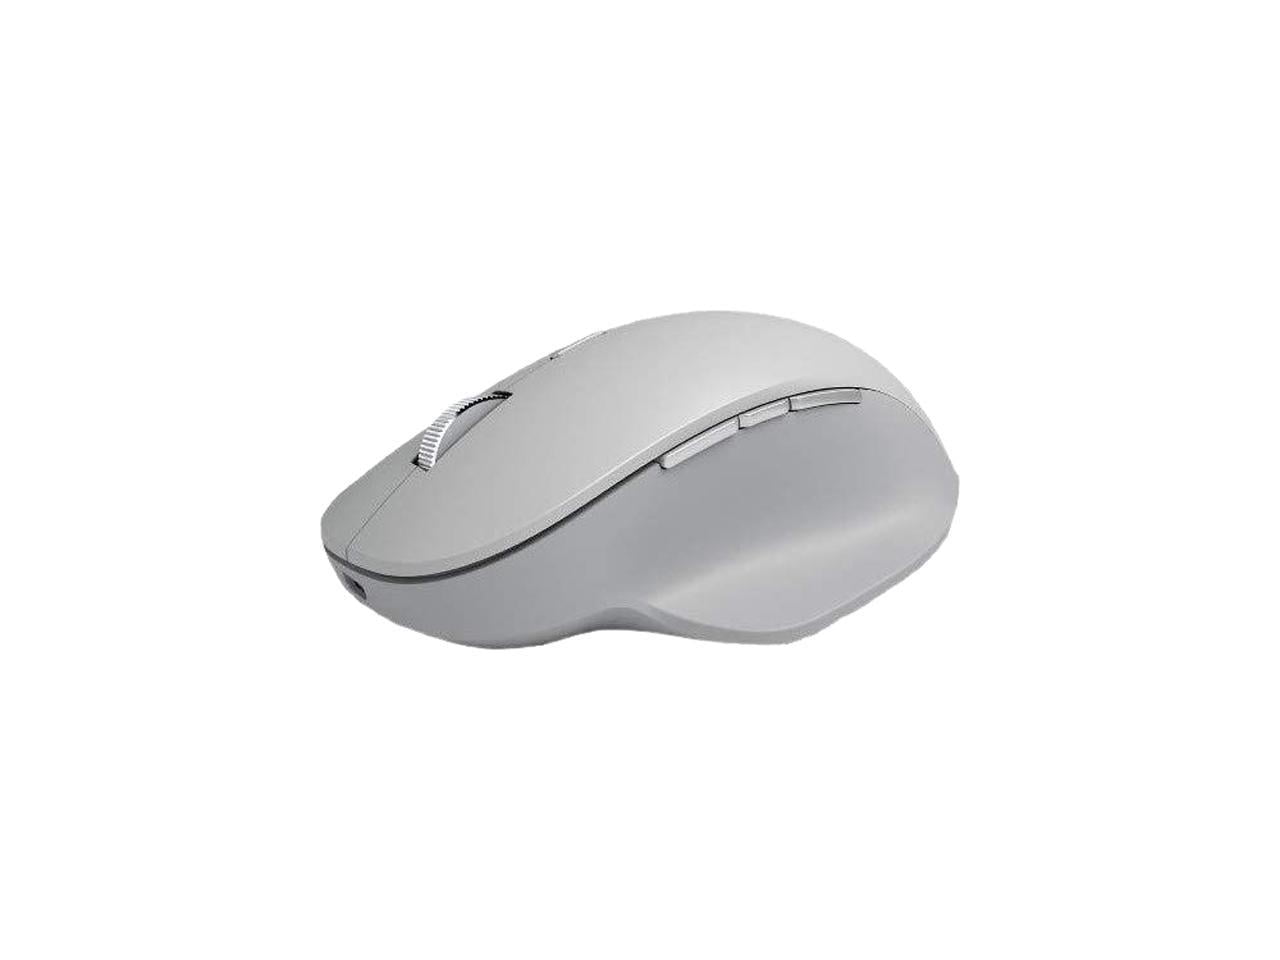 Microsoft Surface Precision Mouse, Bluetooth 4.0 - Gray